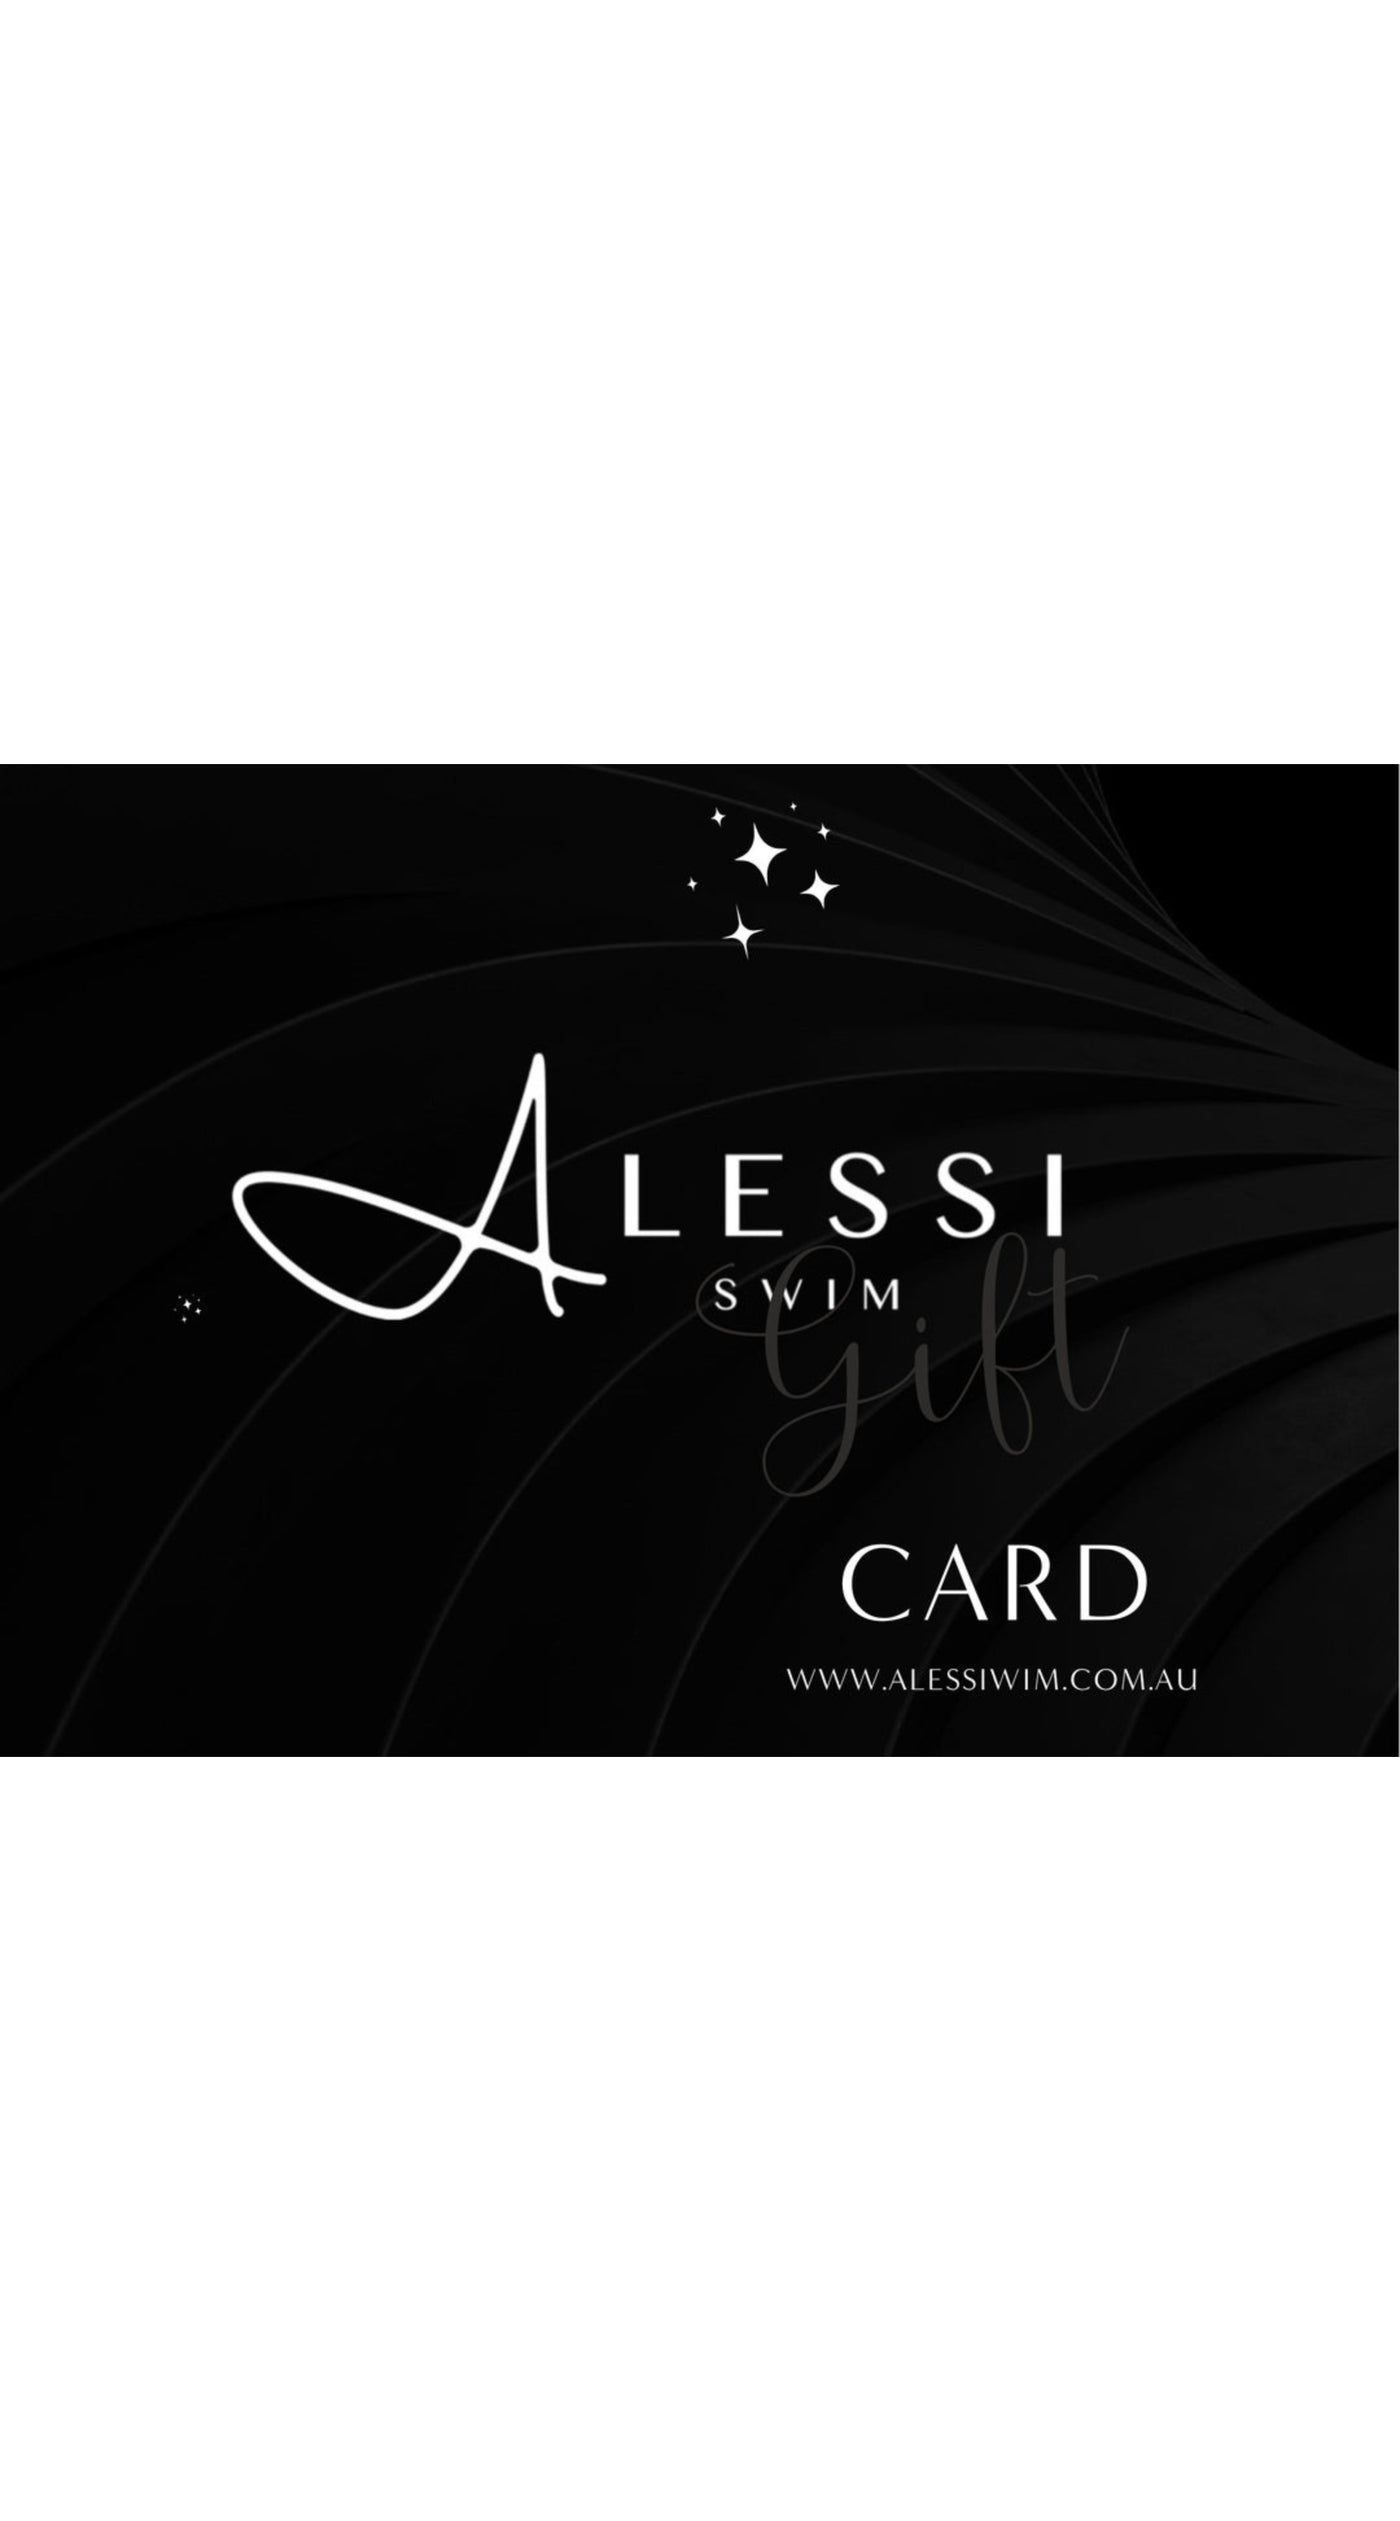 ALESSI SWIM GIFT CARD